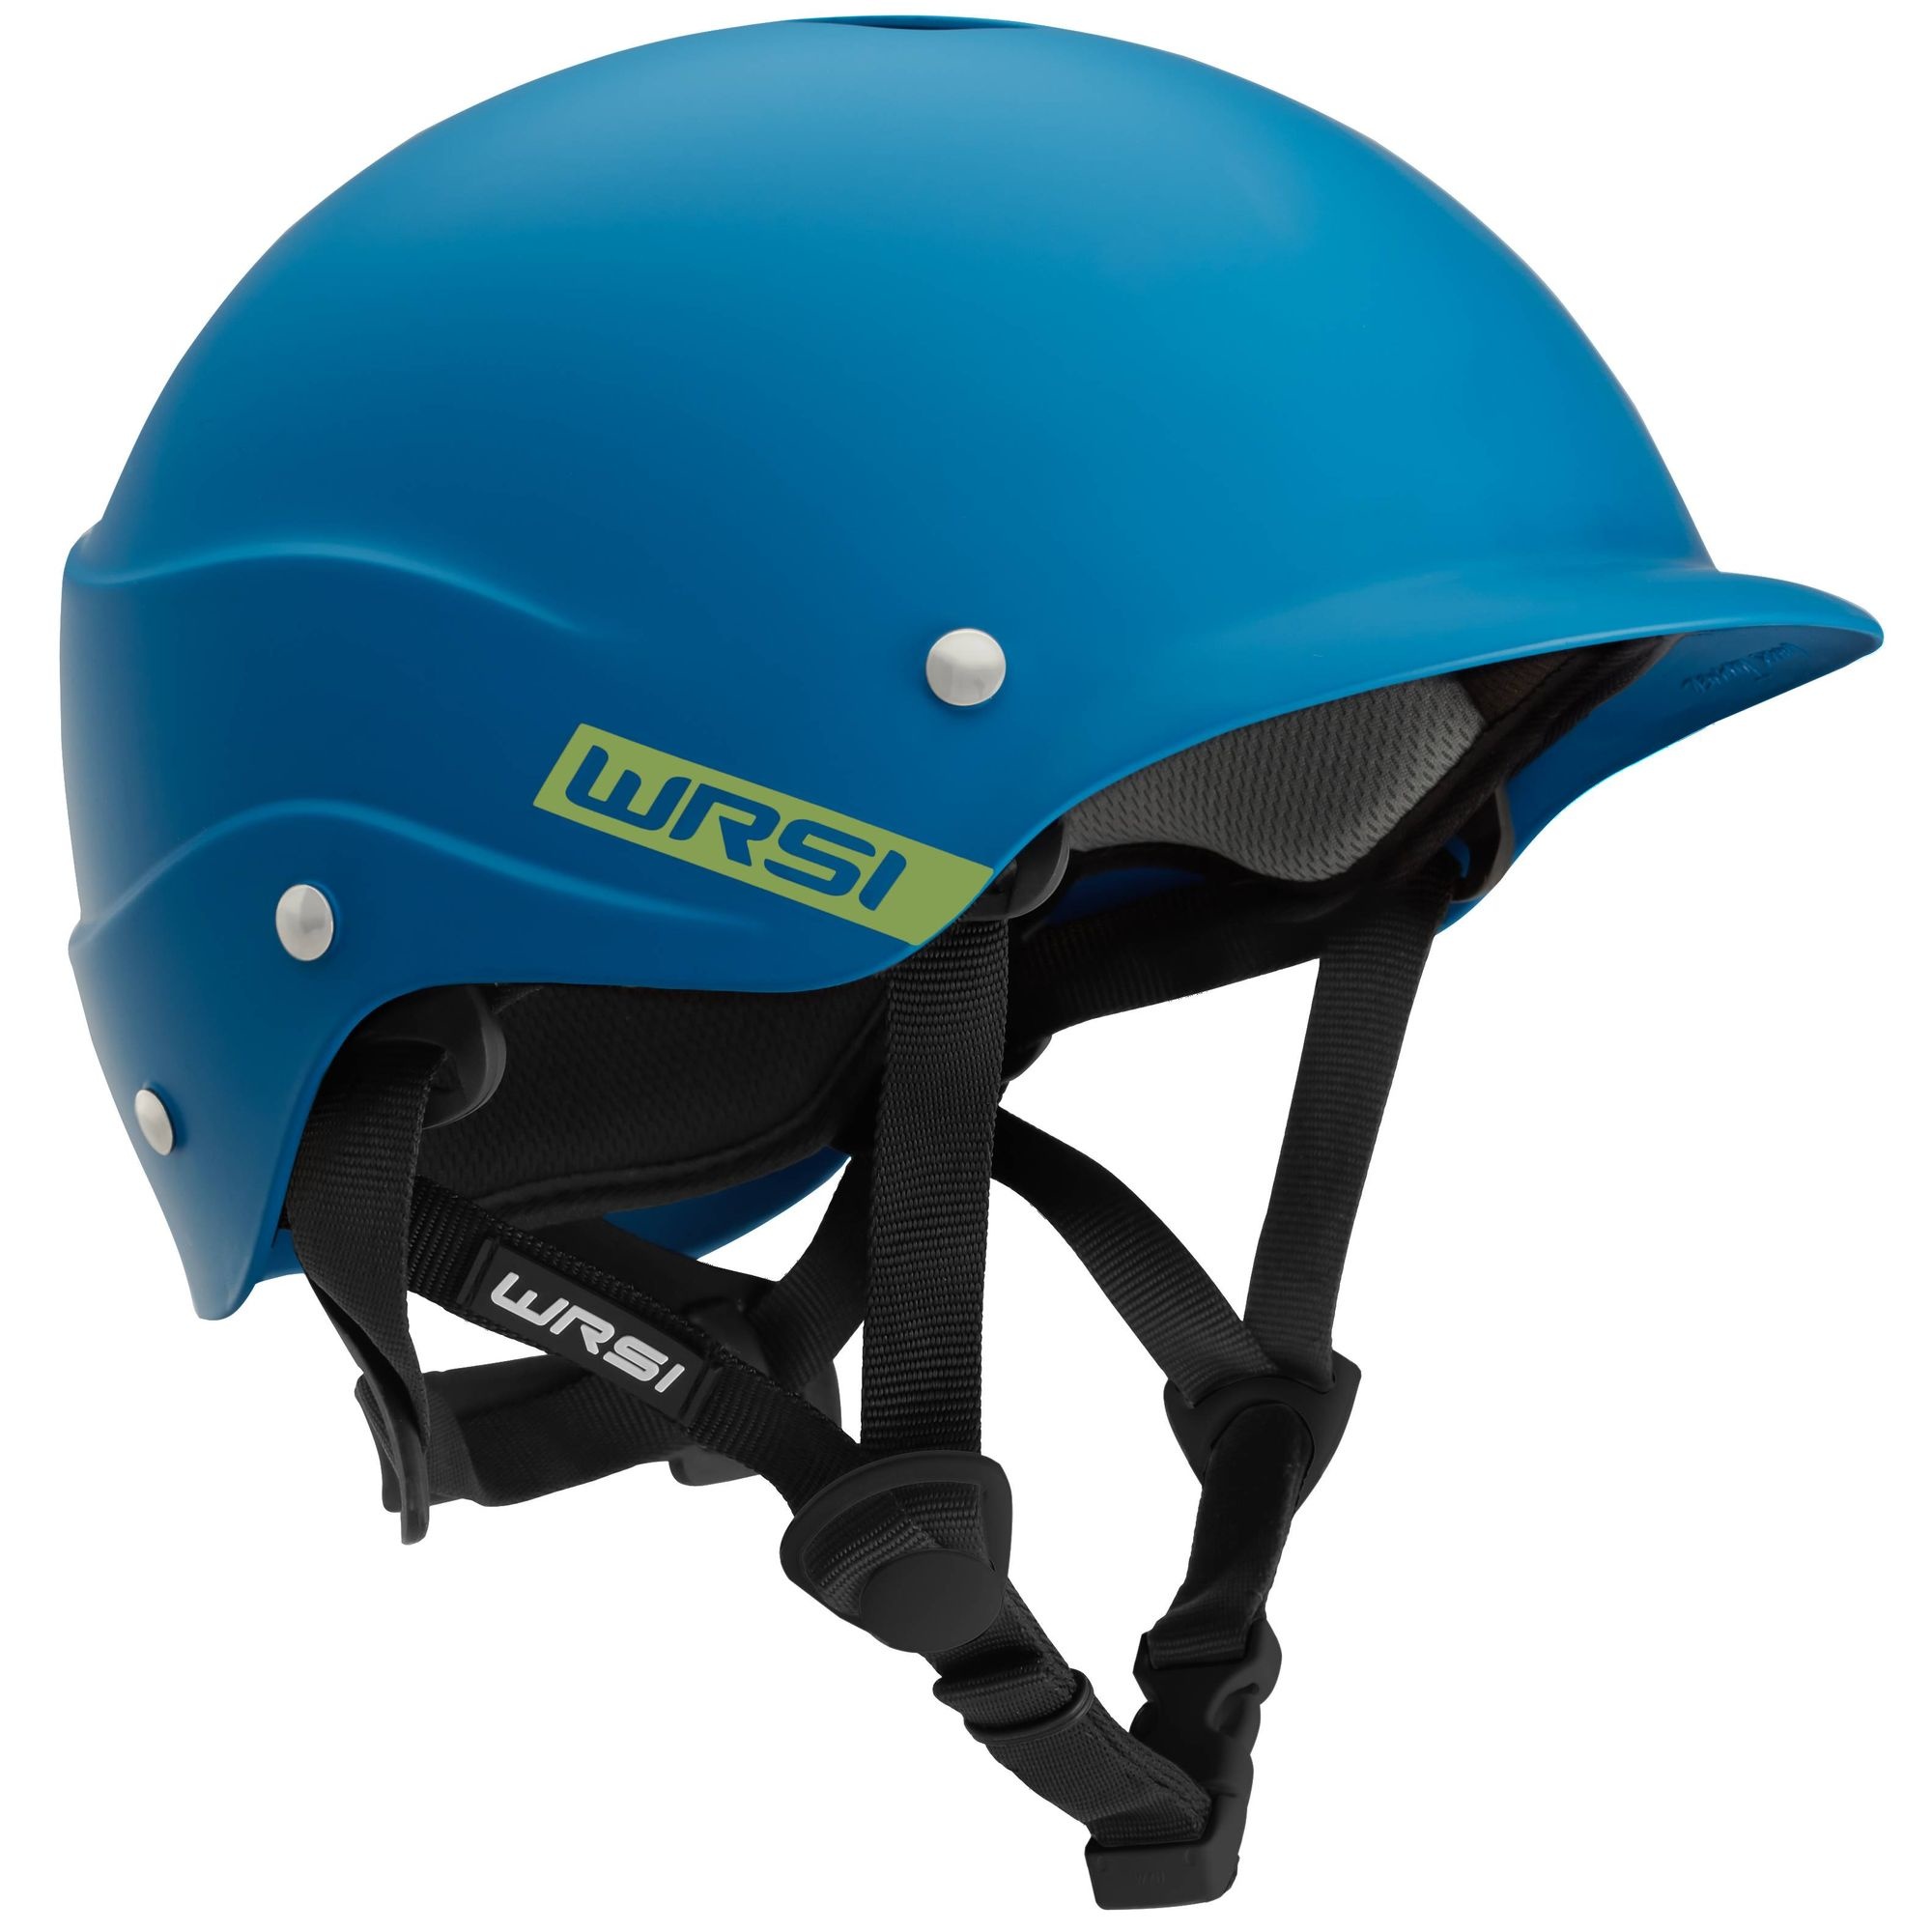 NRS WRSI Current Helmet - 2020